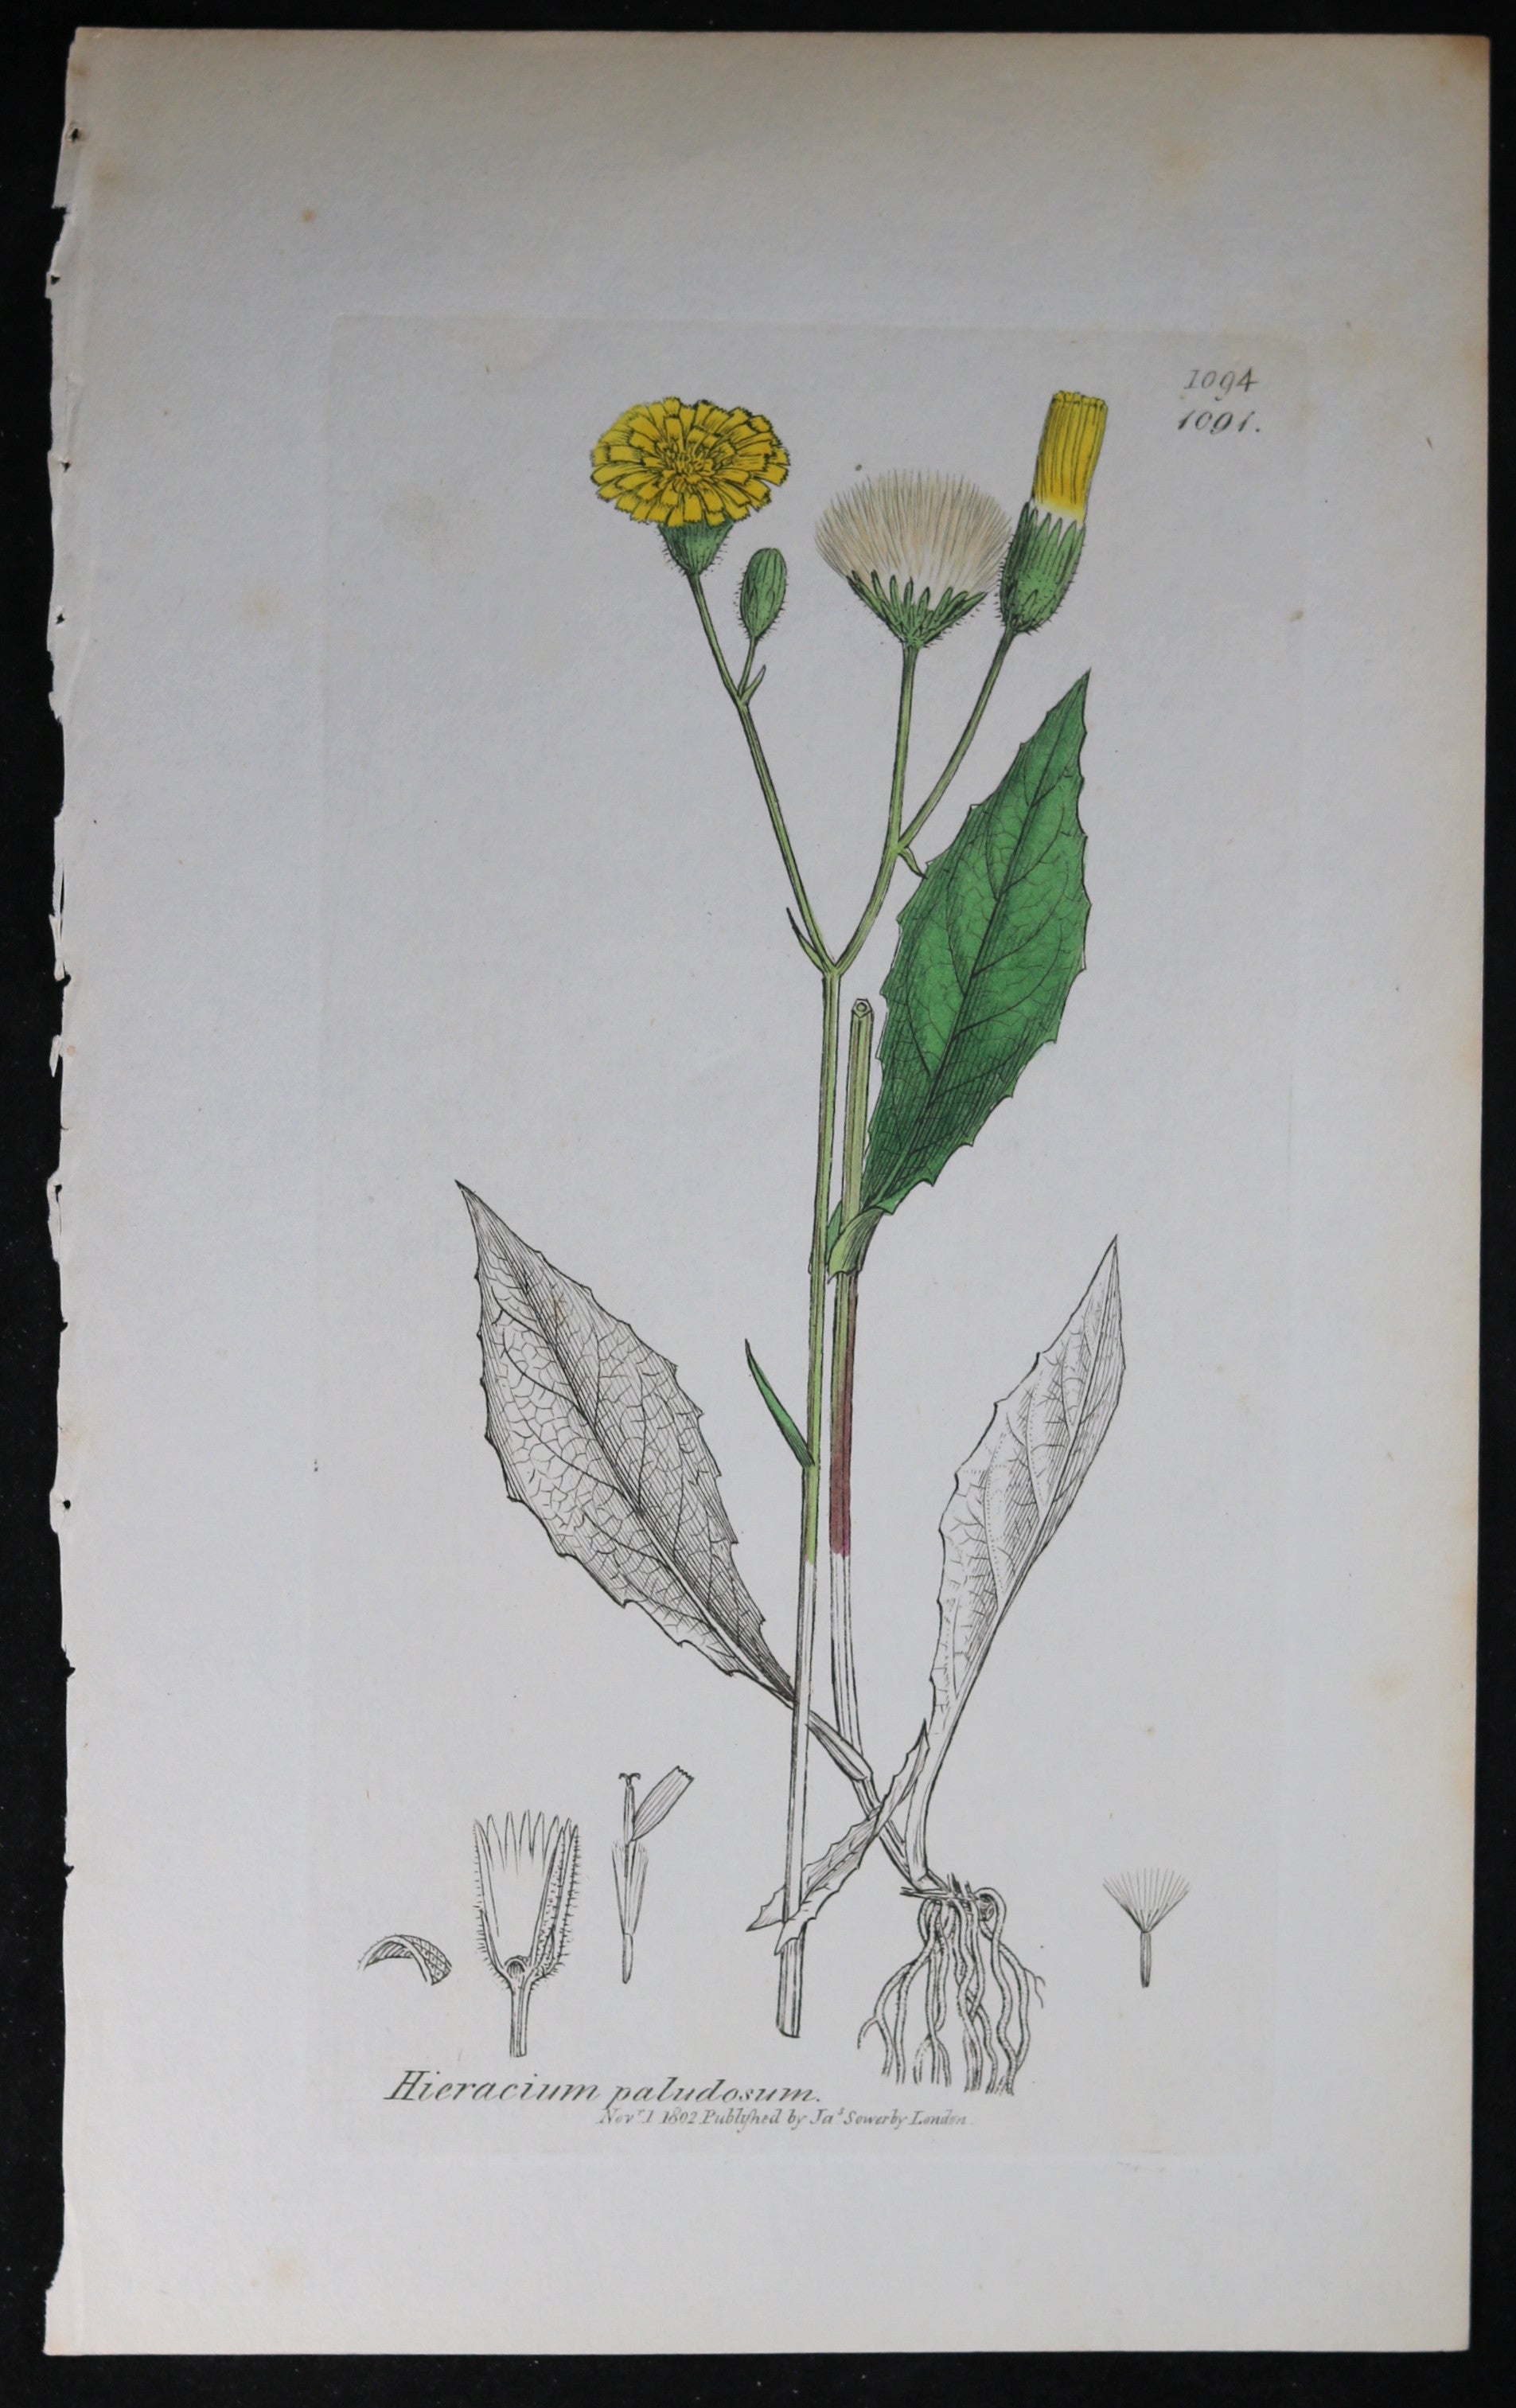 @1802 Sowerby botanical print Herb Linn